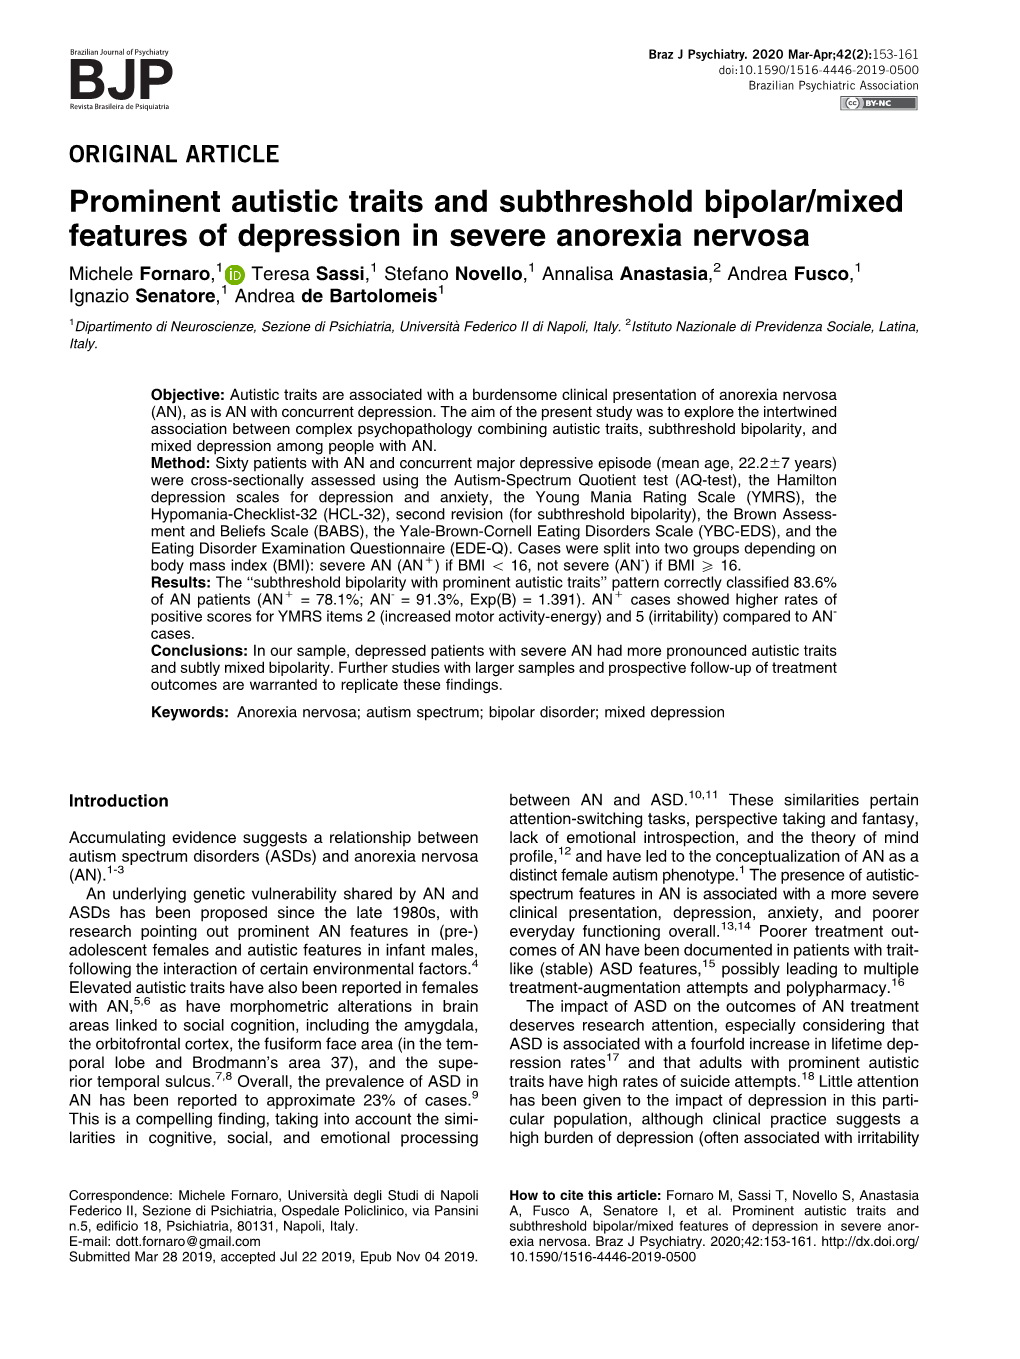 Prominent Autistic Traits and Subthreshold Bipolar